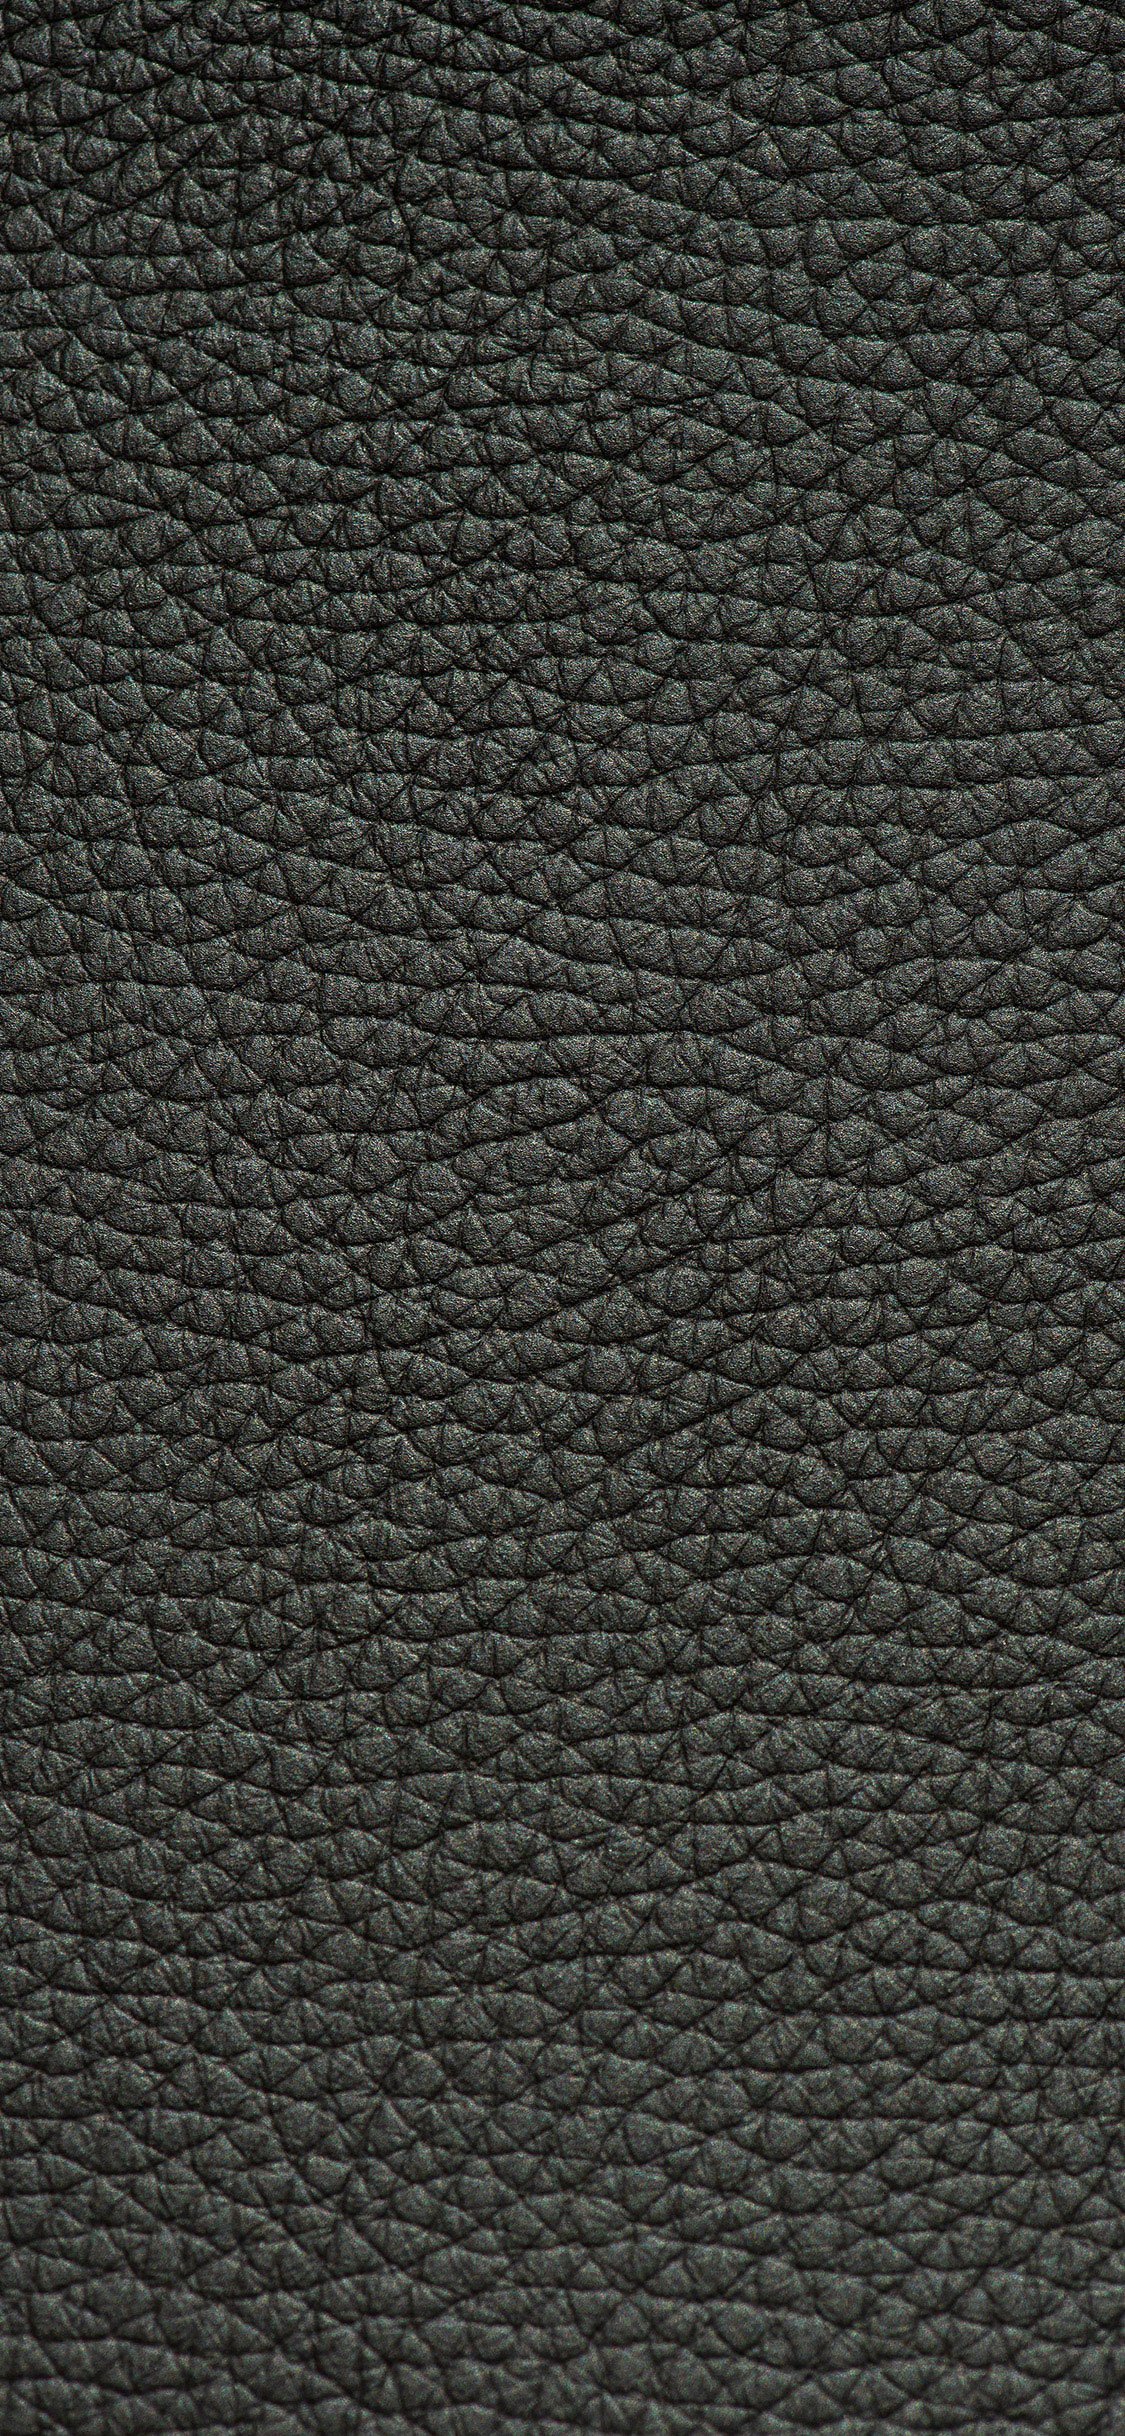 Pebbles Texture Wallpaper  iPhone Android  Desktop Backgrounds